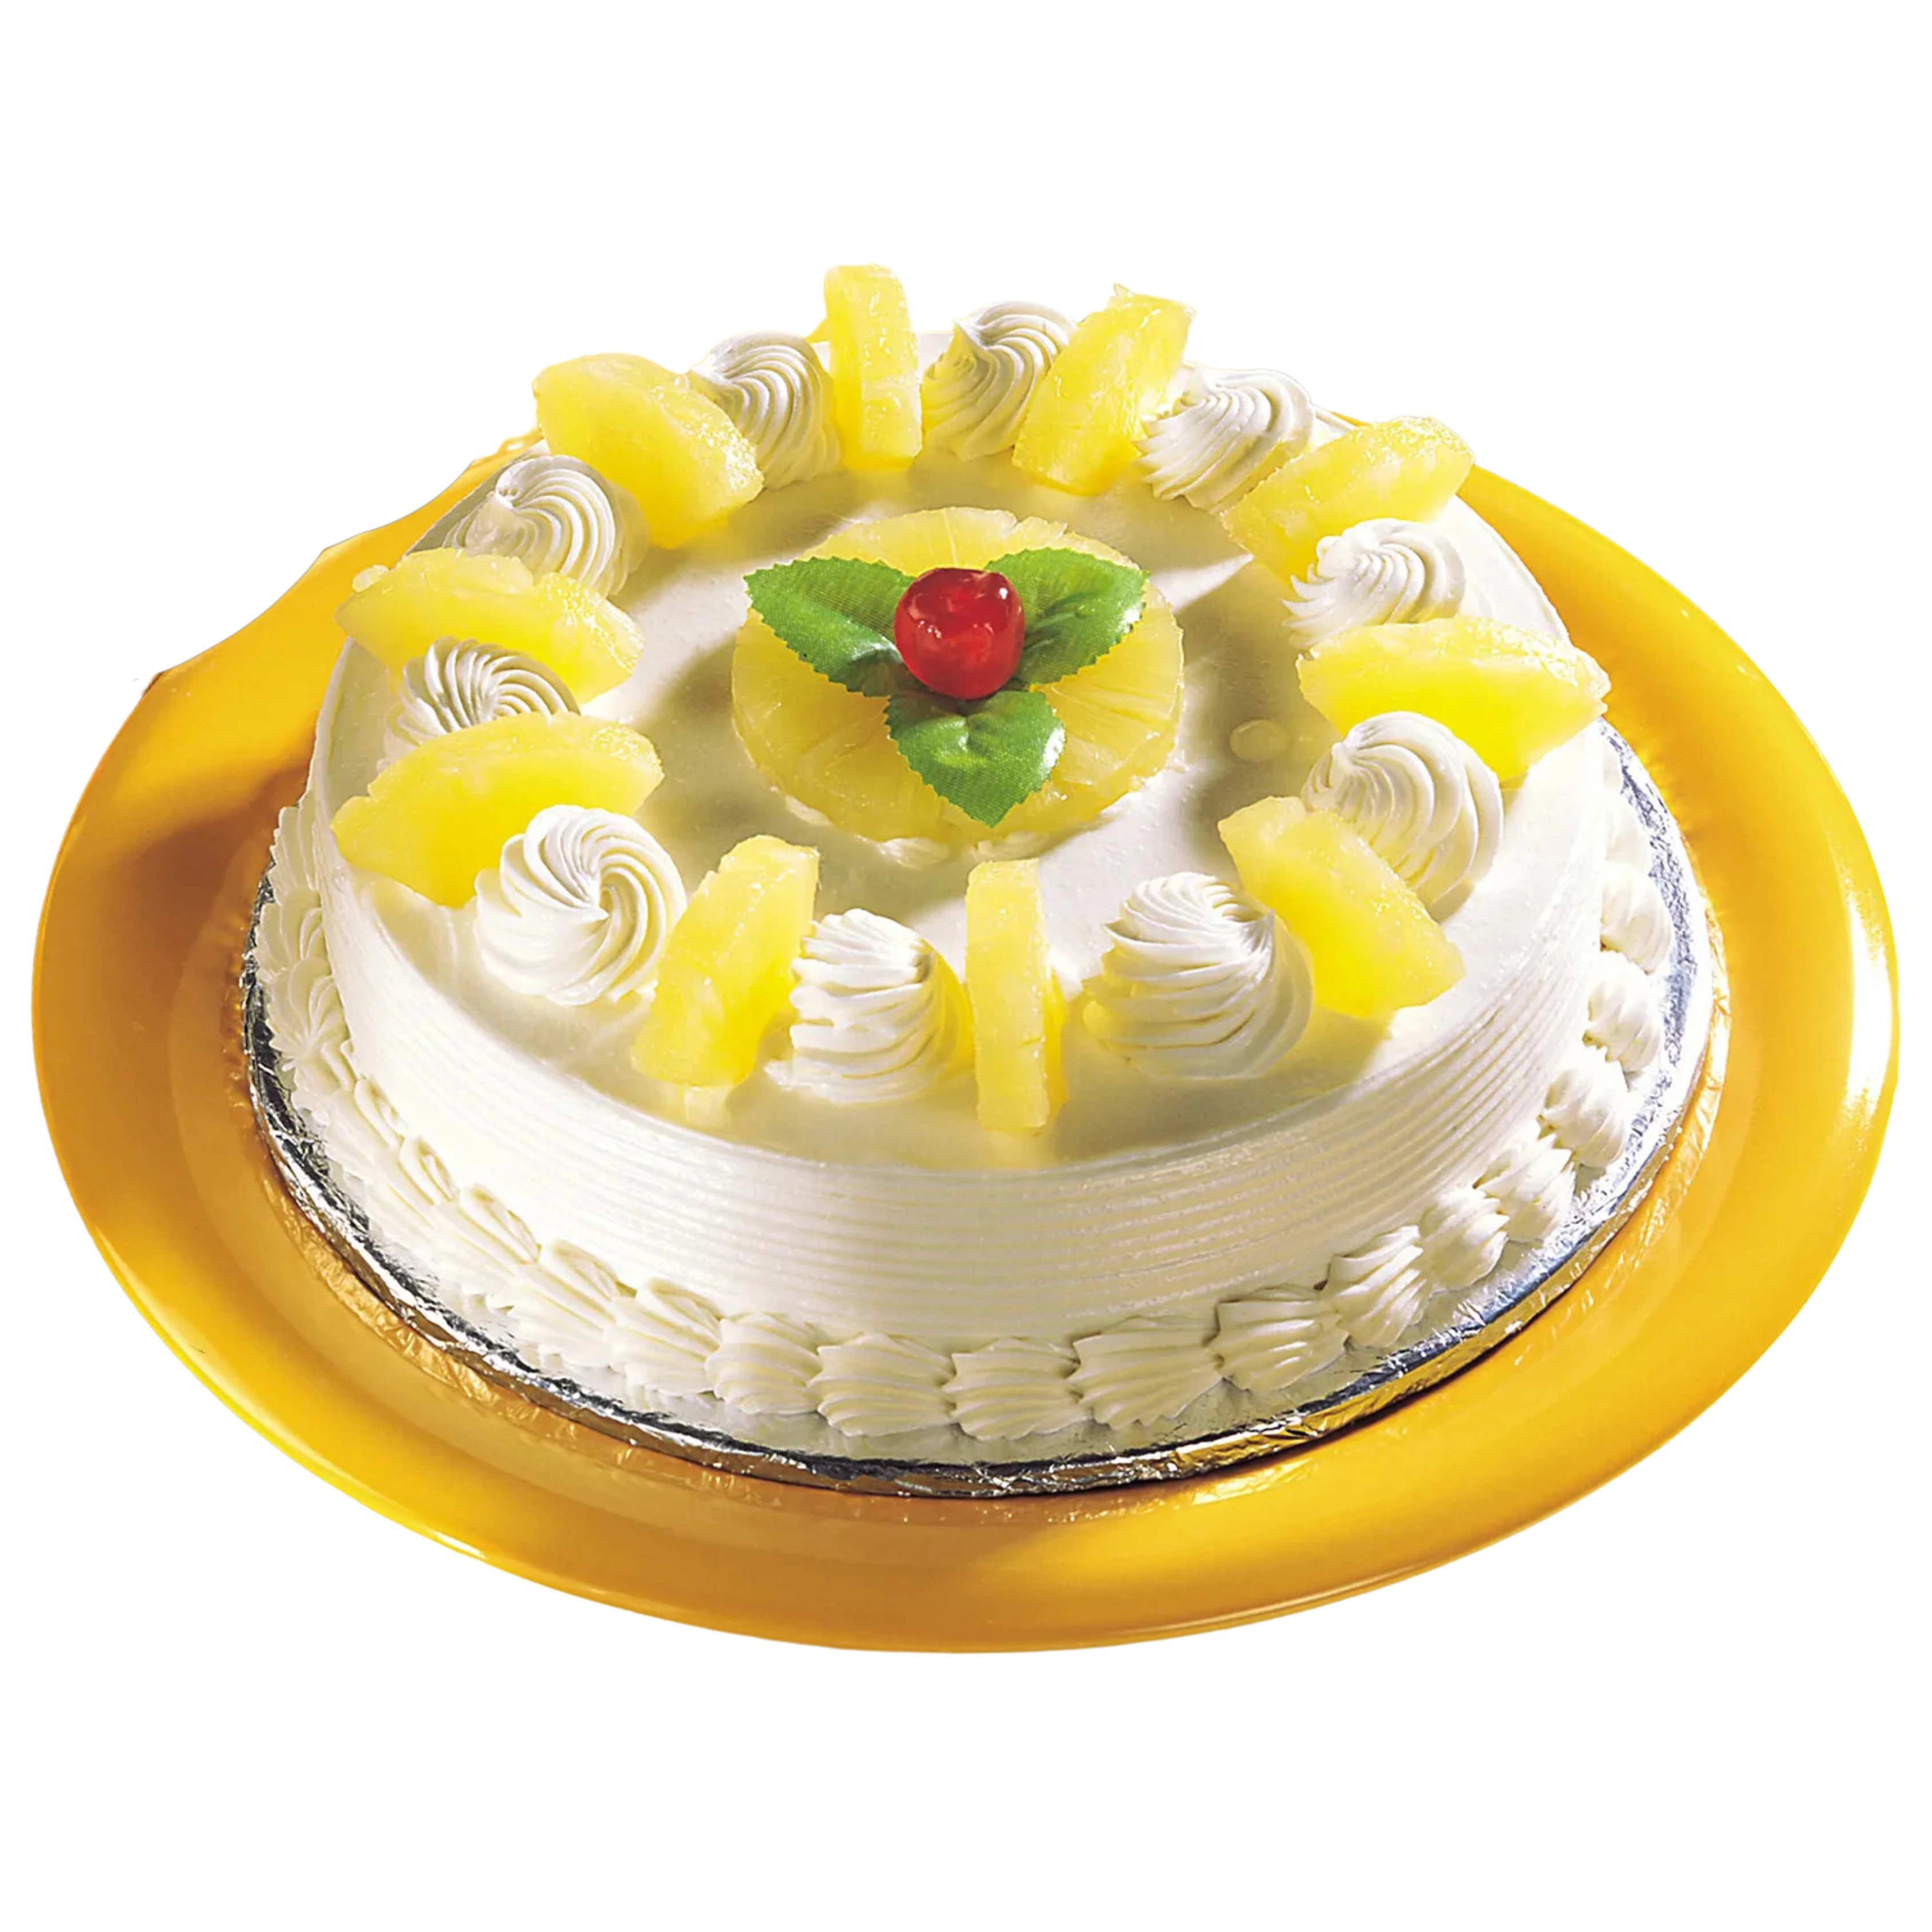 Fresh & Creamy Pineapple Cake